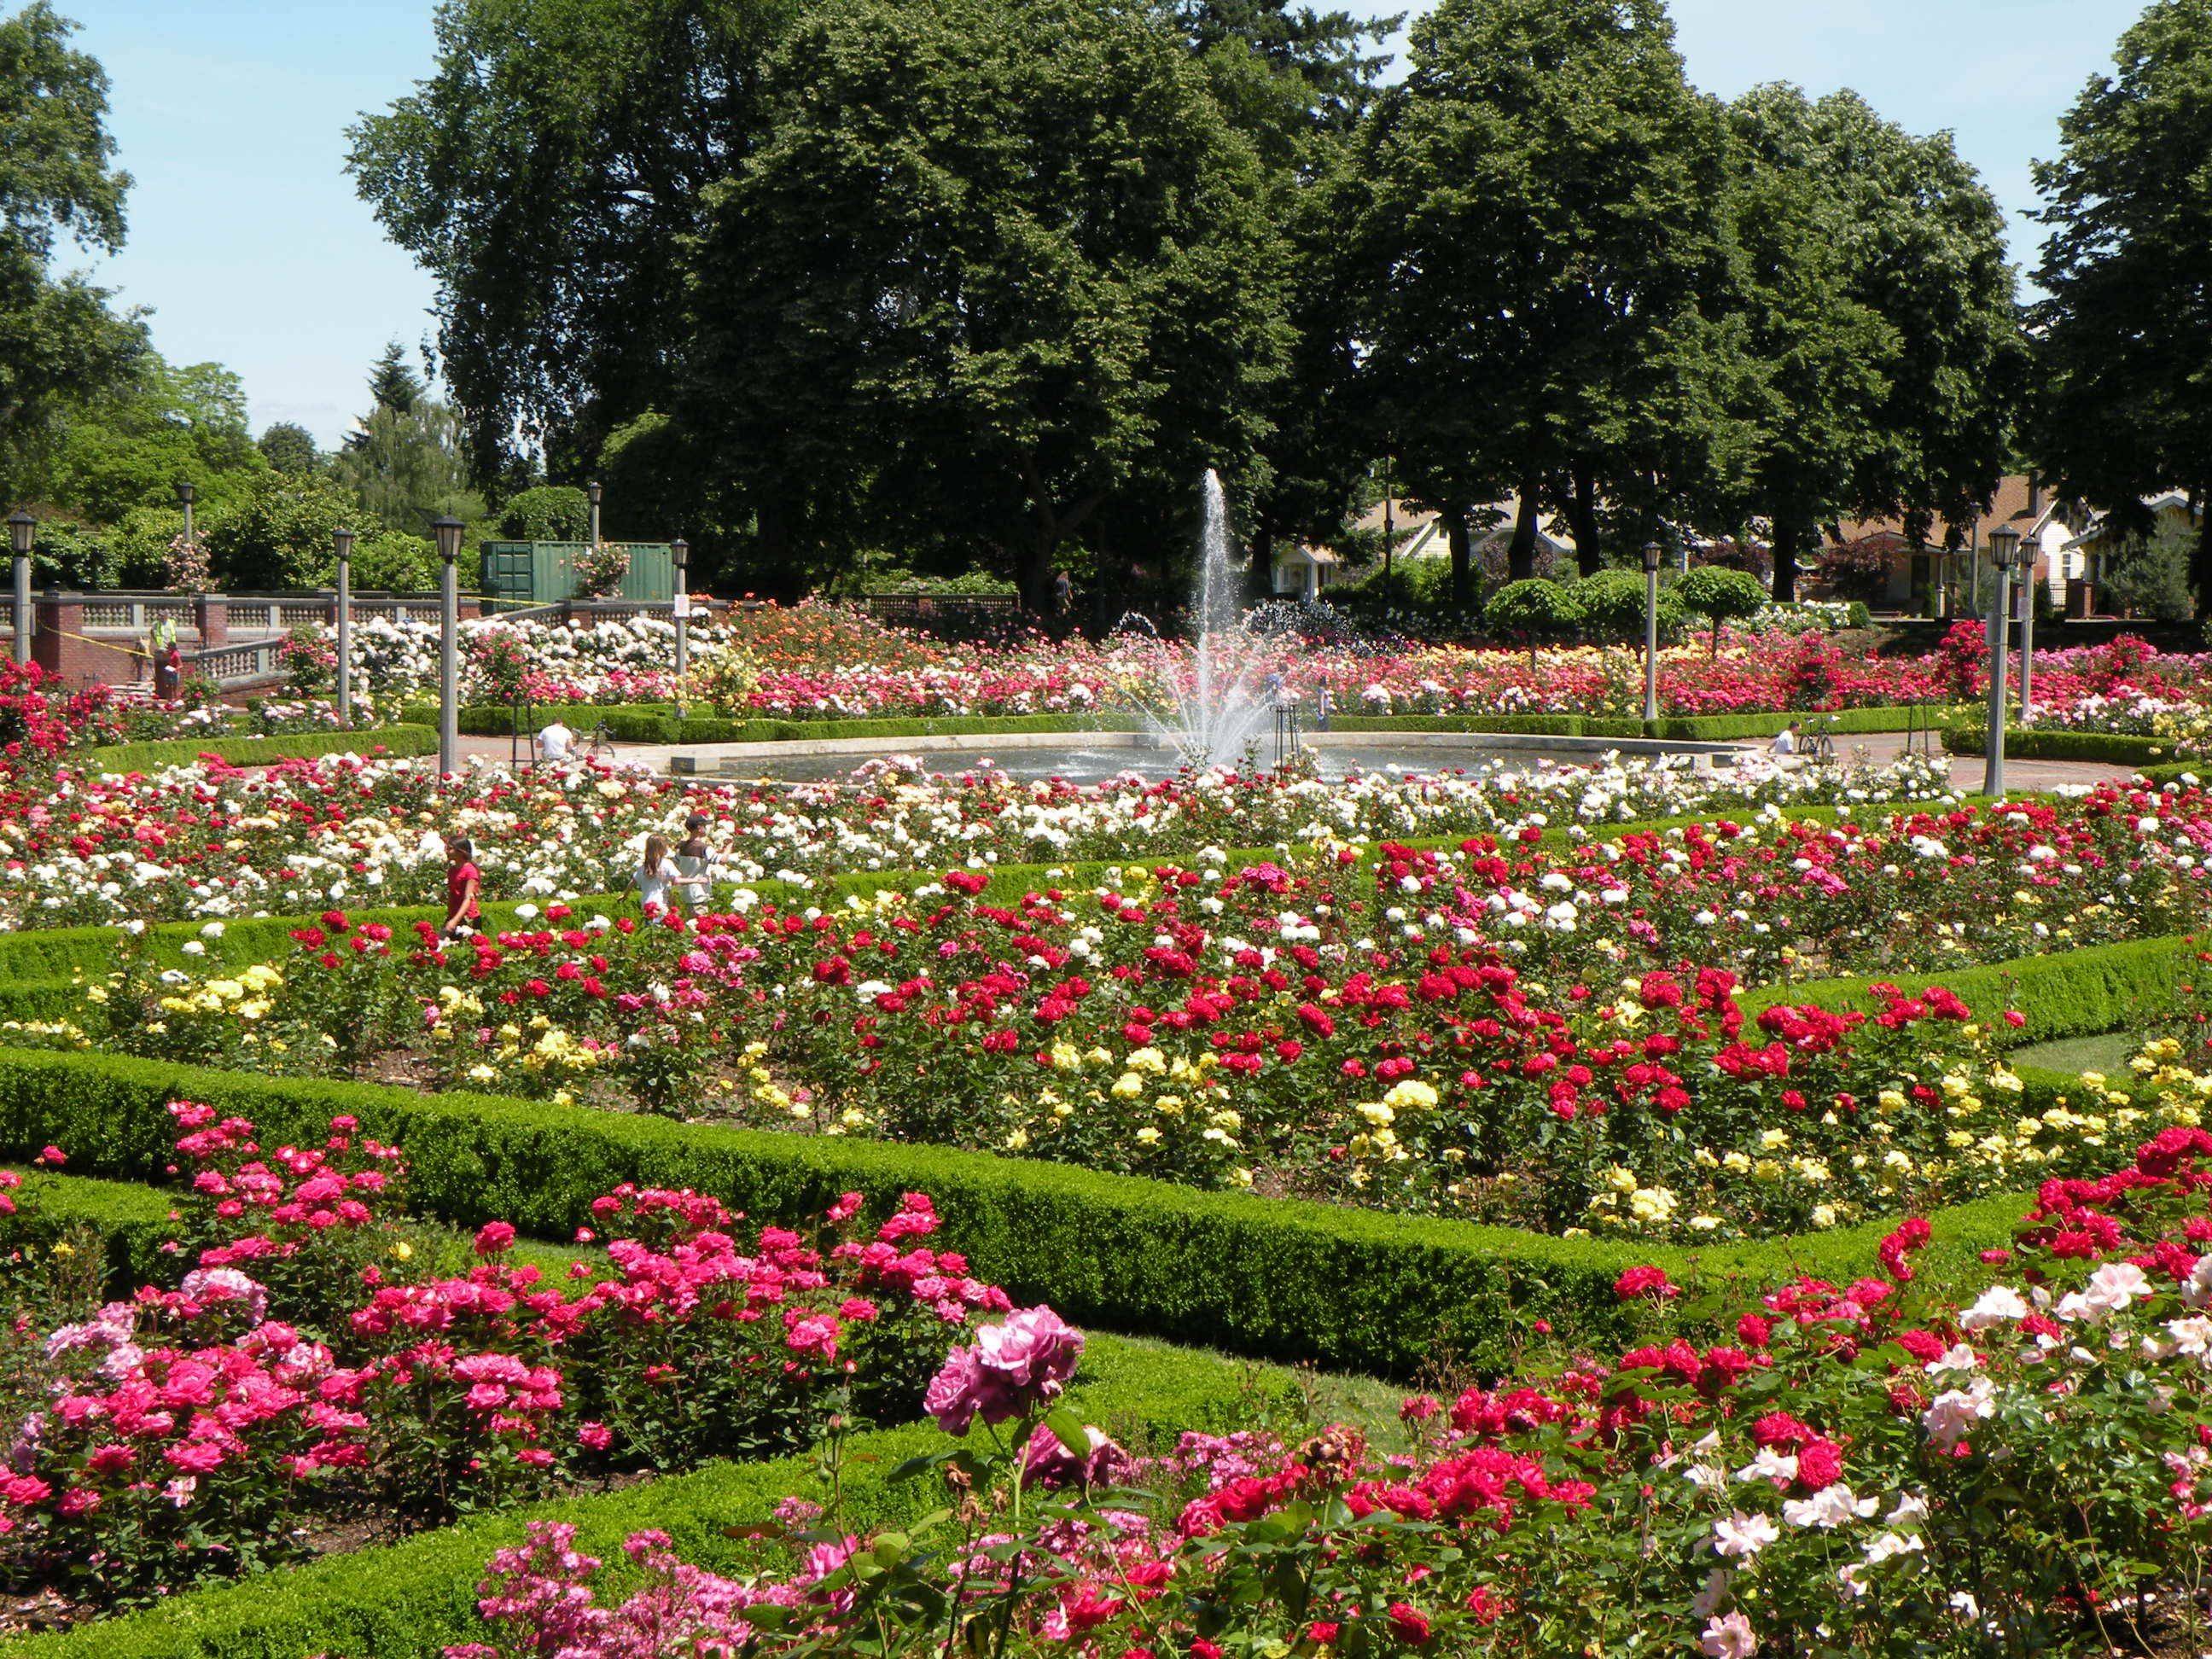 Portlands Rose Garden